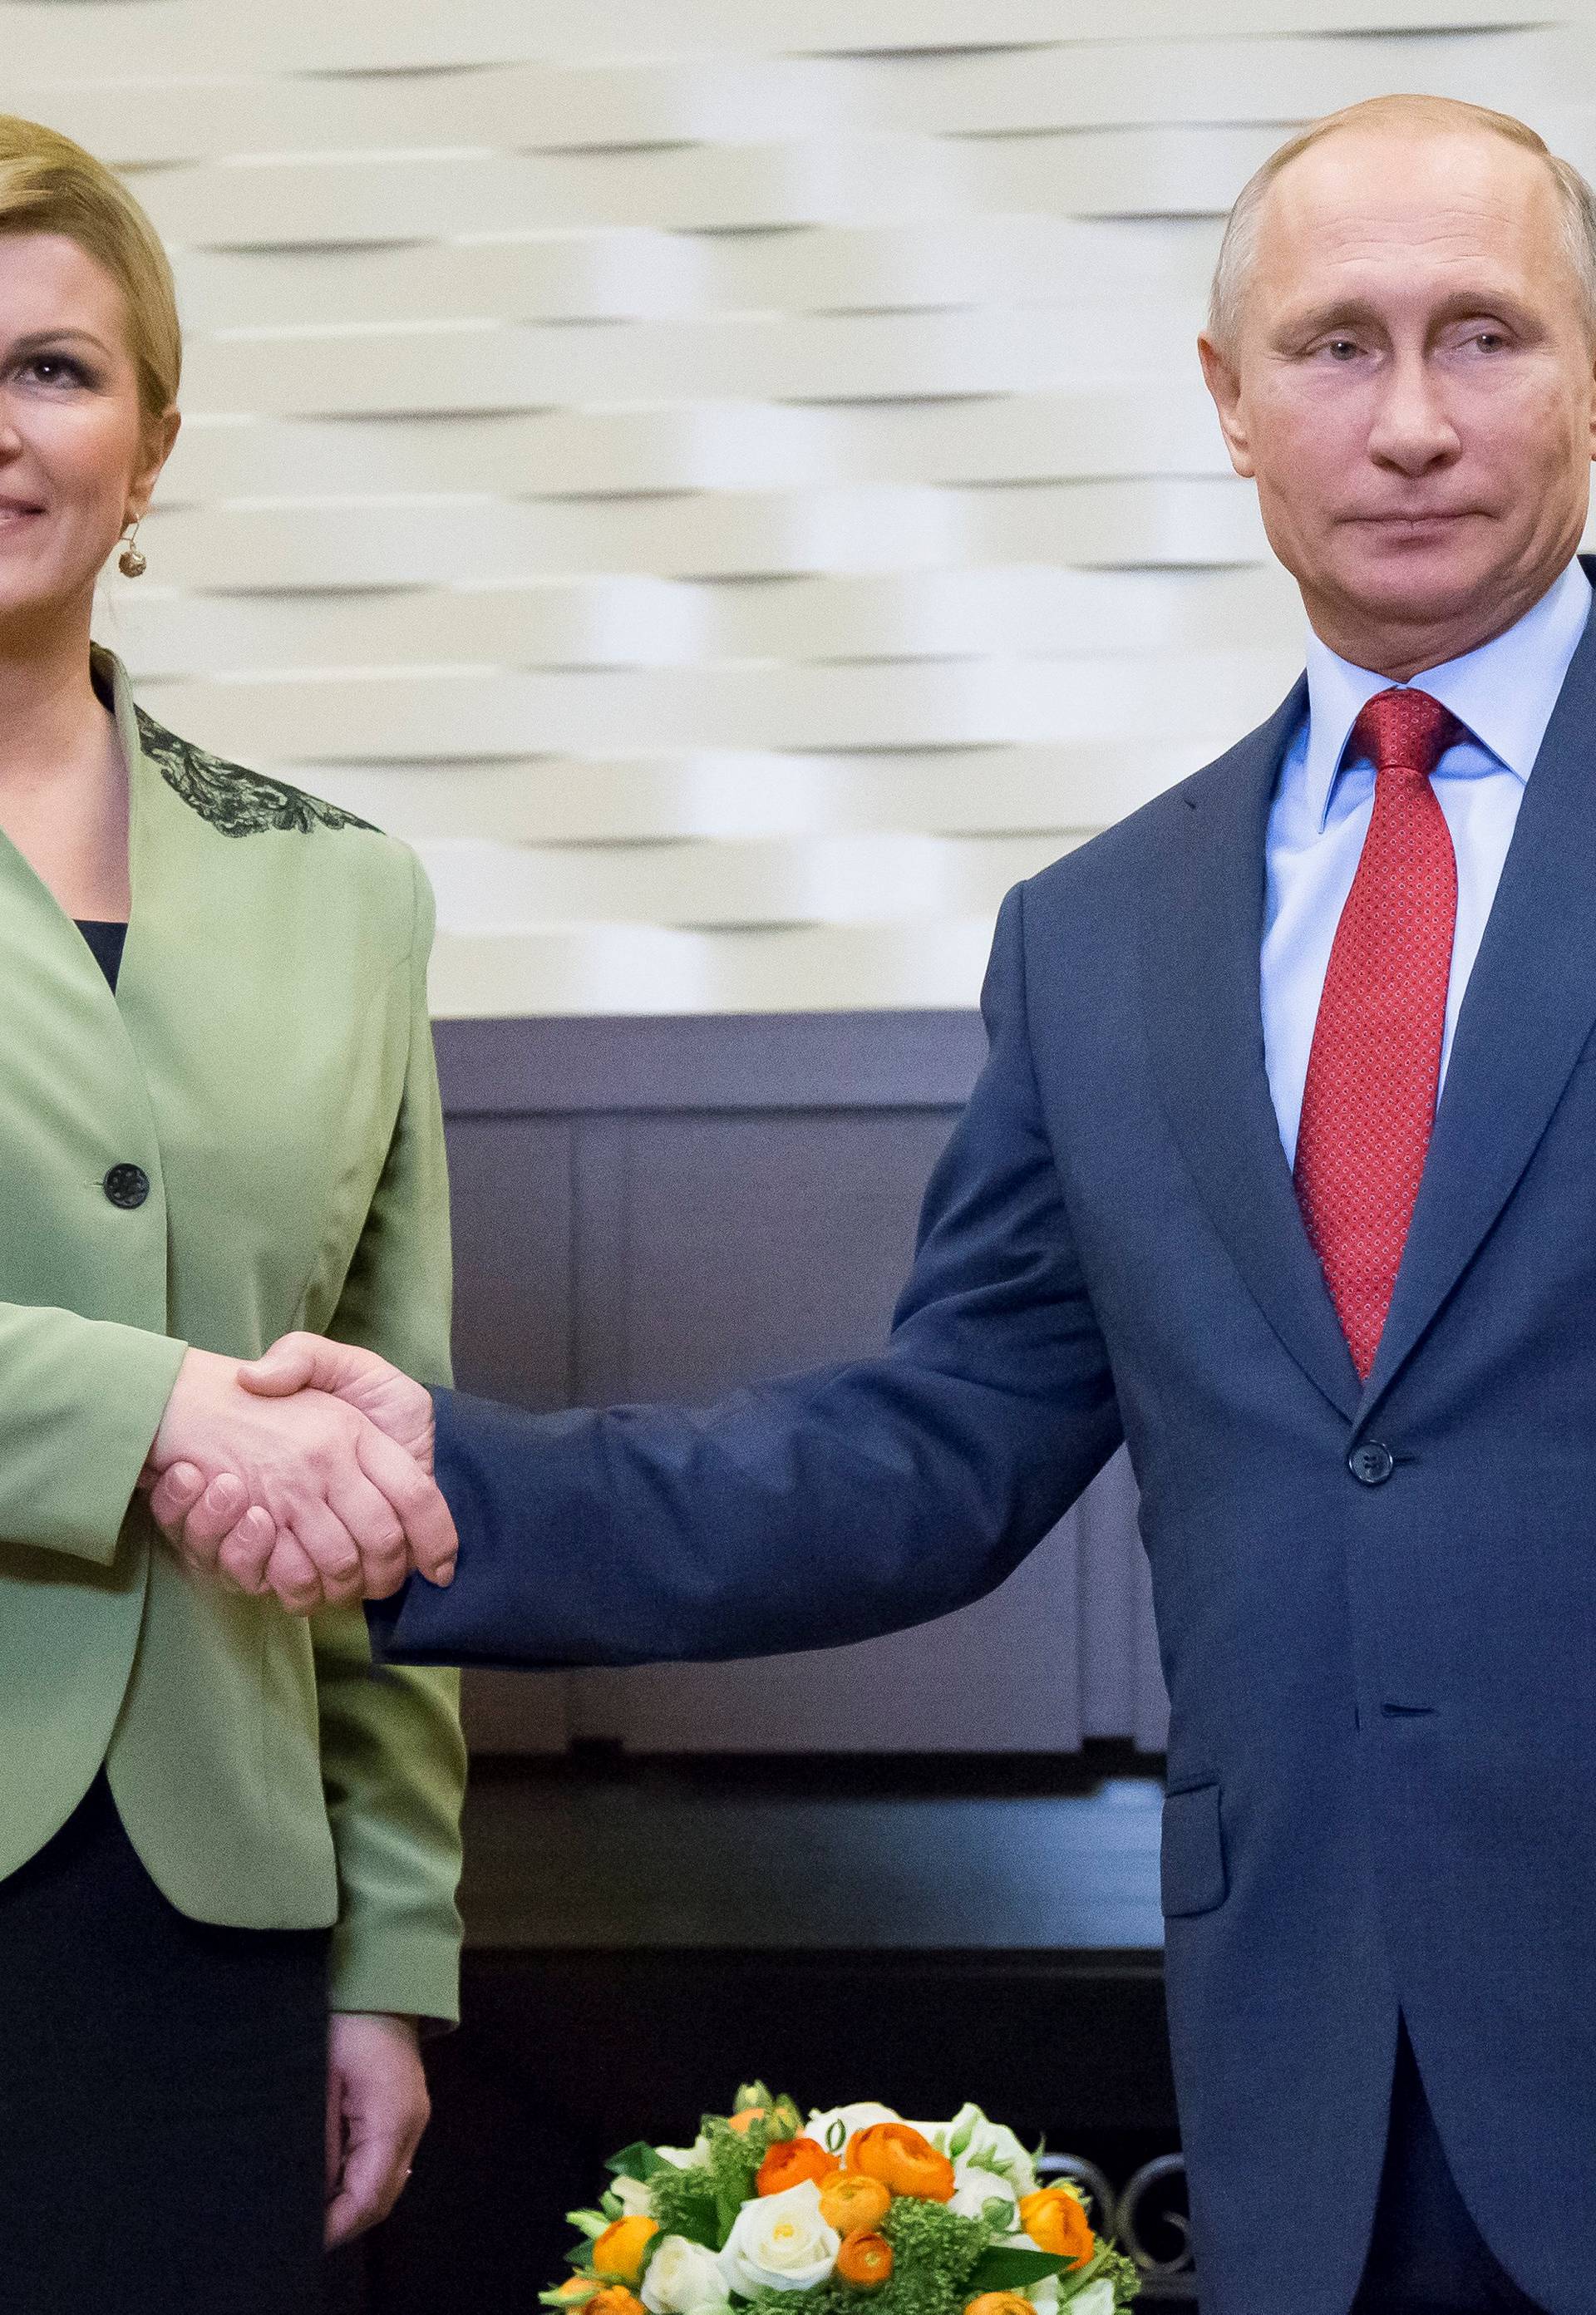 Croatian President Kolinda Grabar-Kitarovic and Putin pose for a photo during their meeting in Sochi